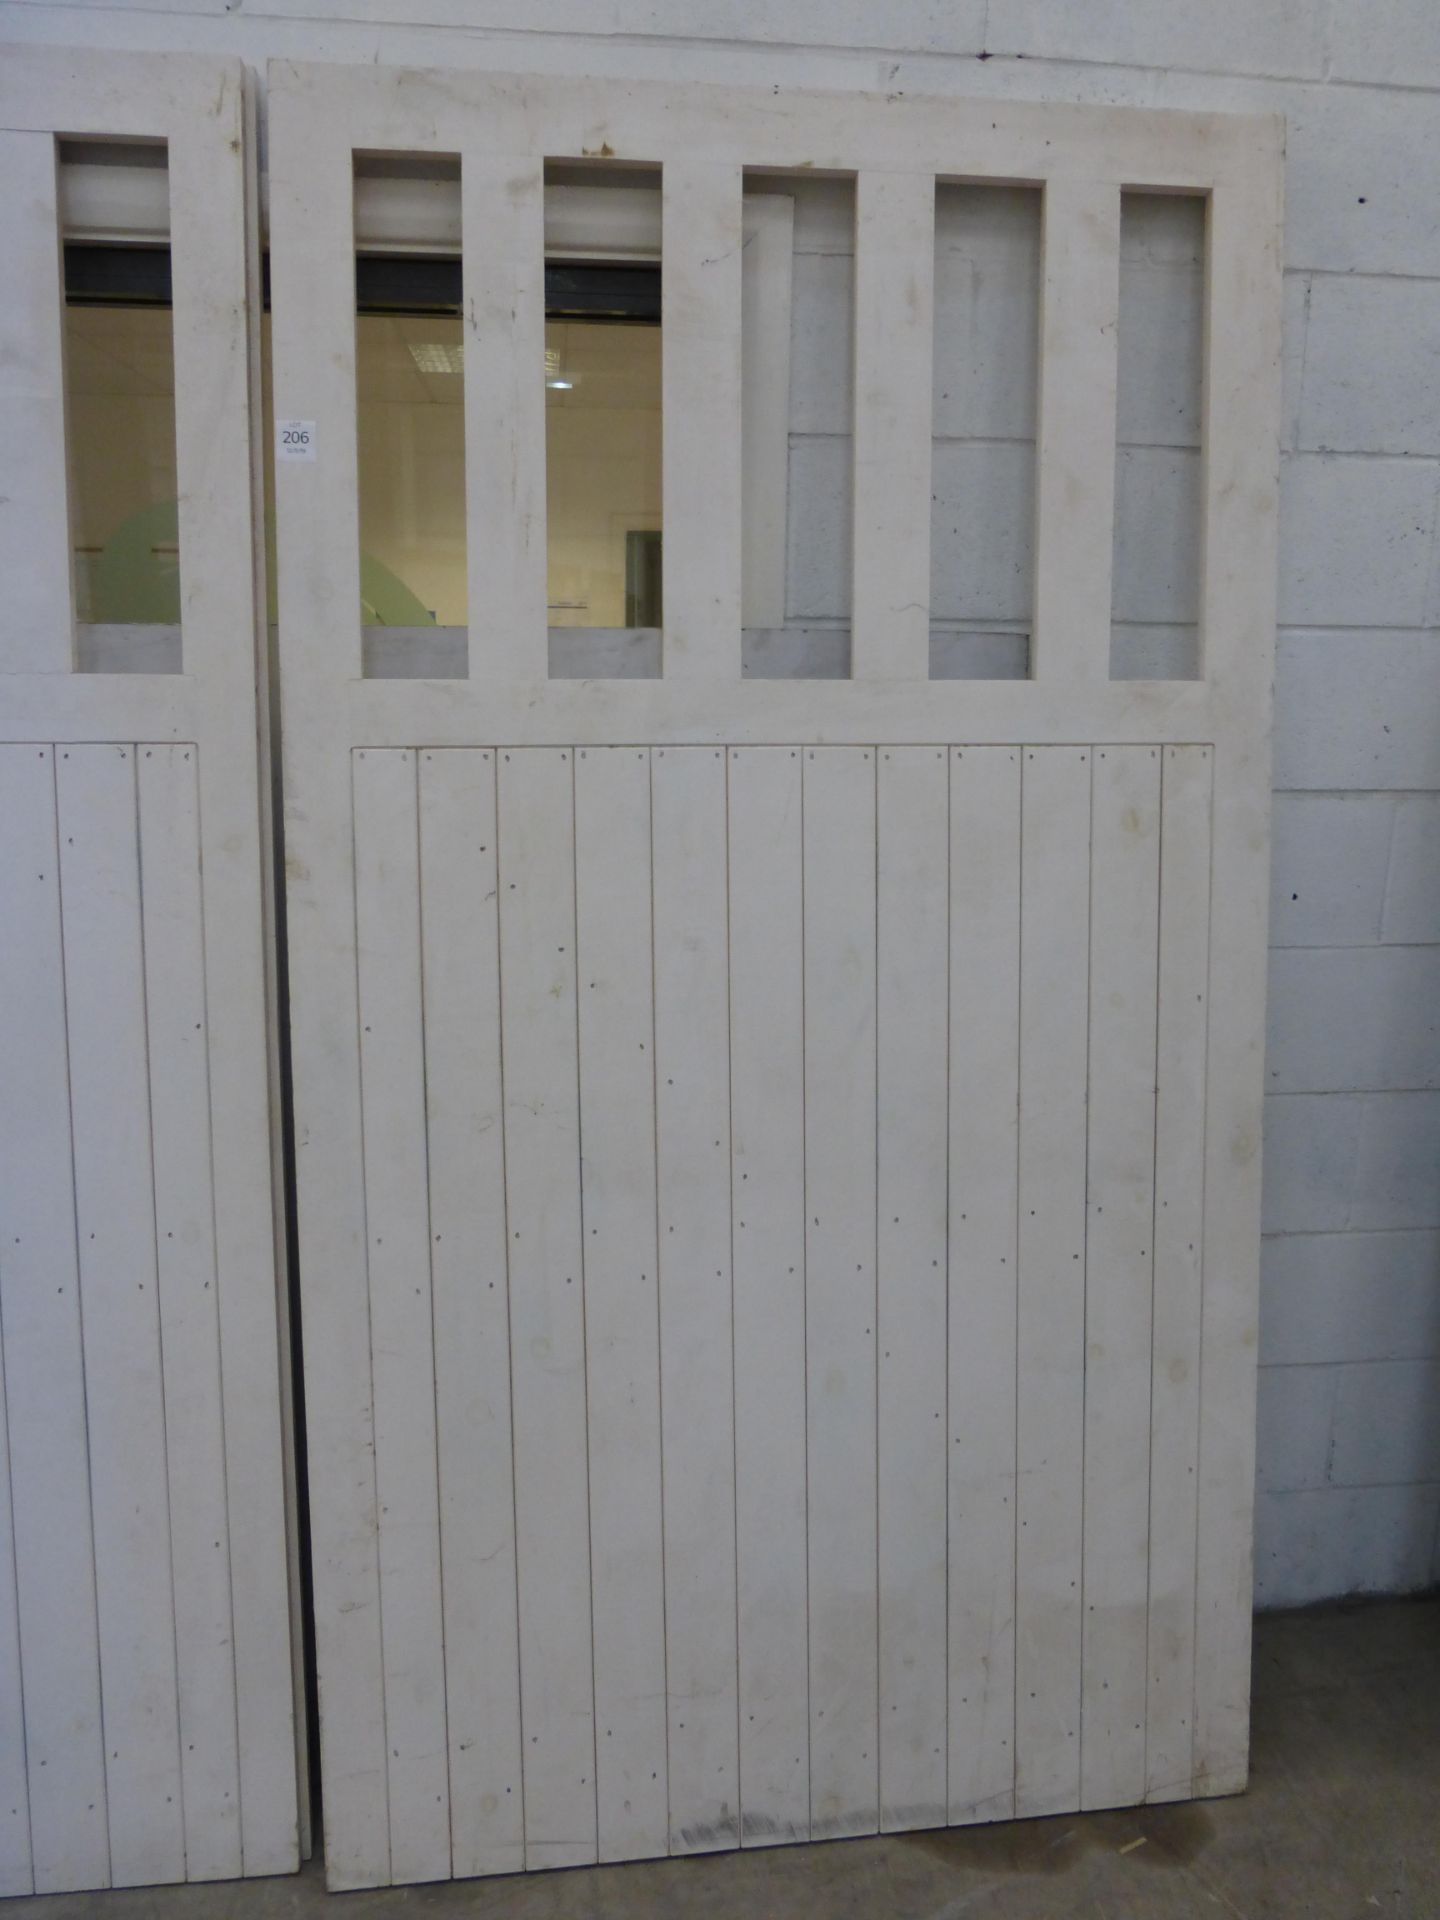 Pair of White Wooden Garage Doors - Image 2 of 2